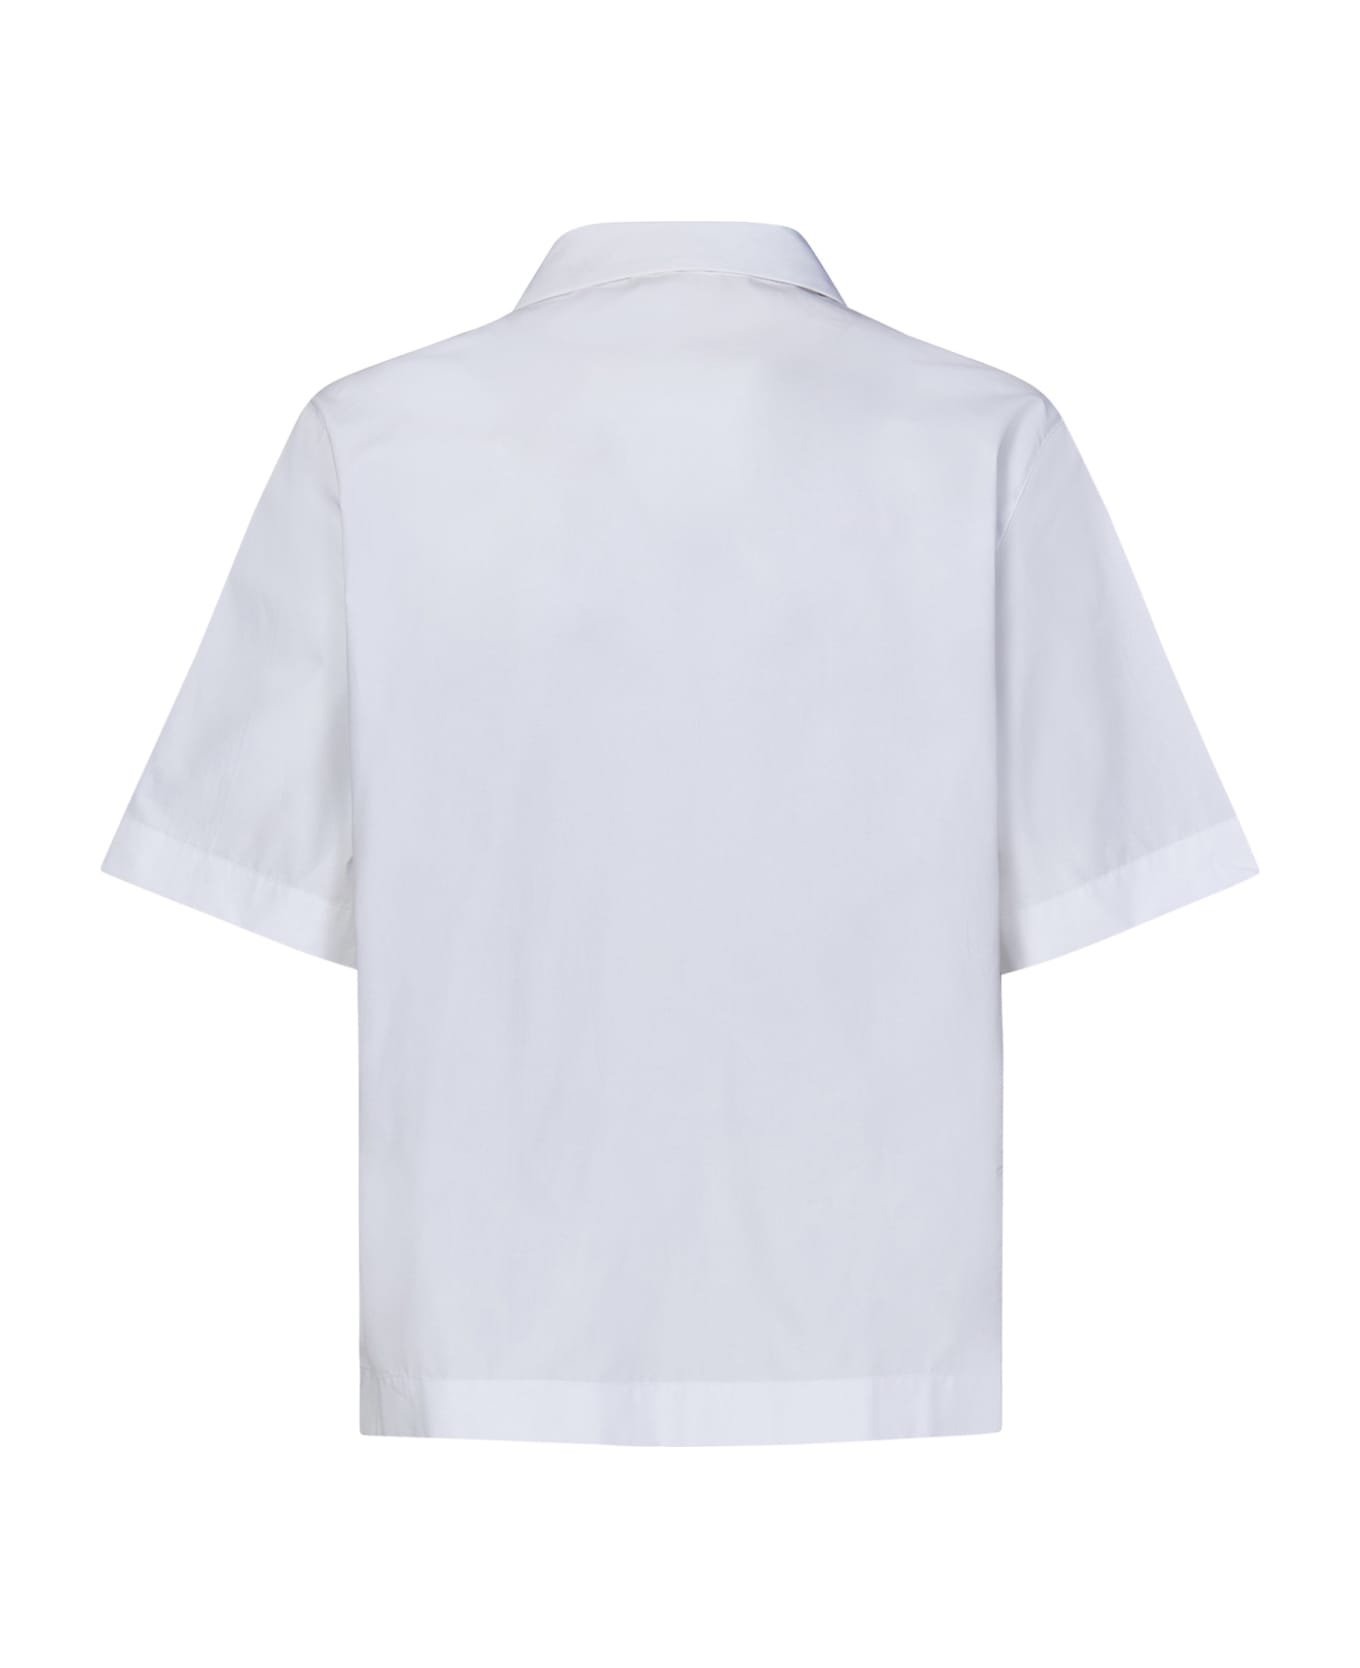 Givenchy Shirt - White シャツ